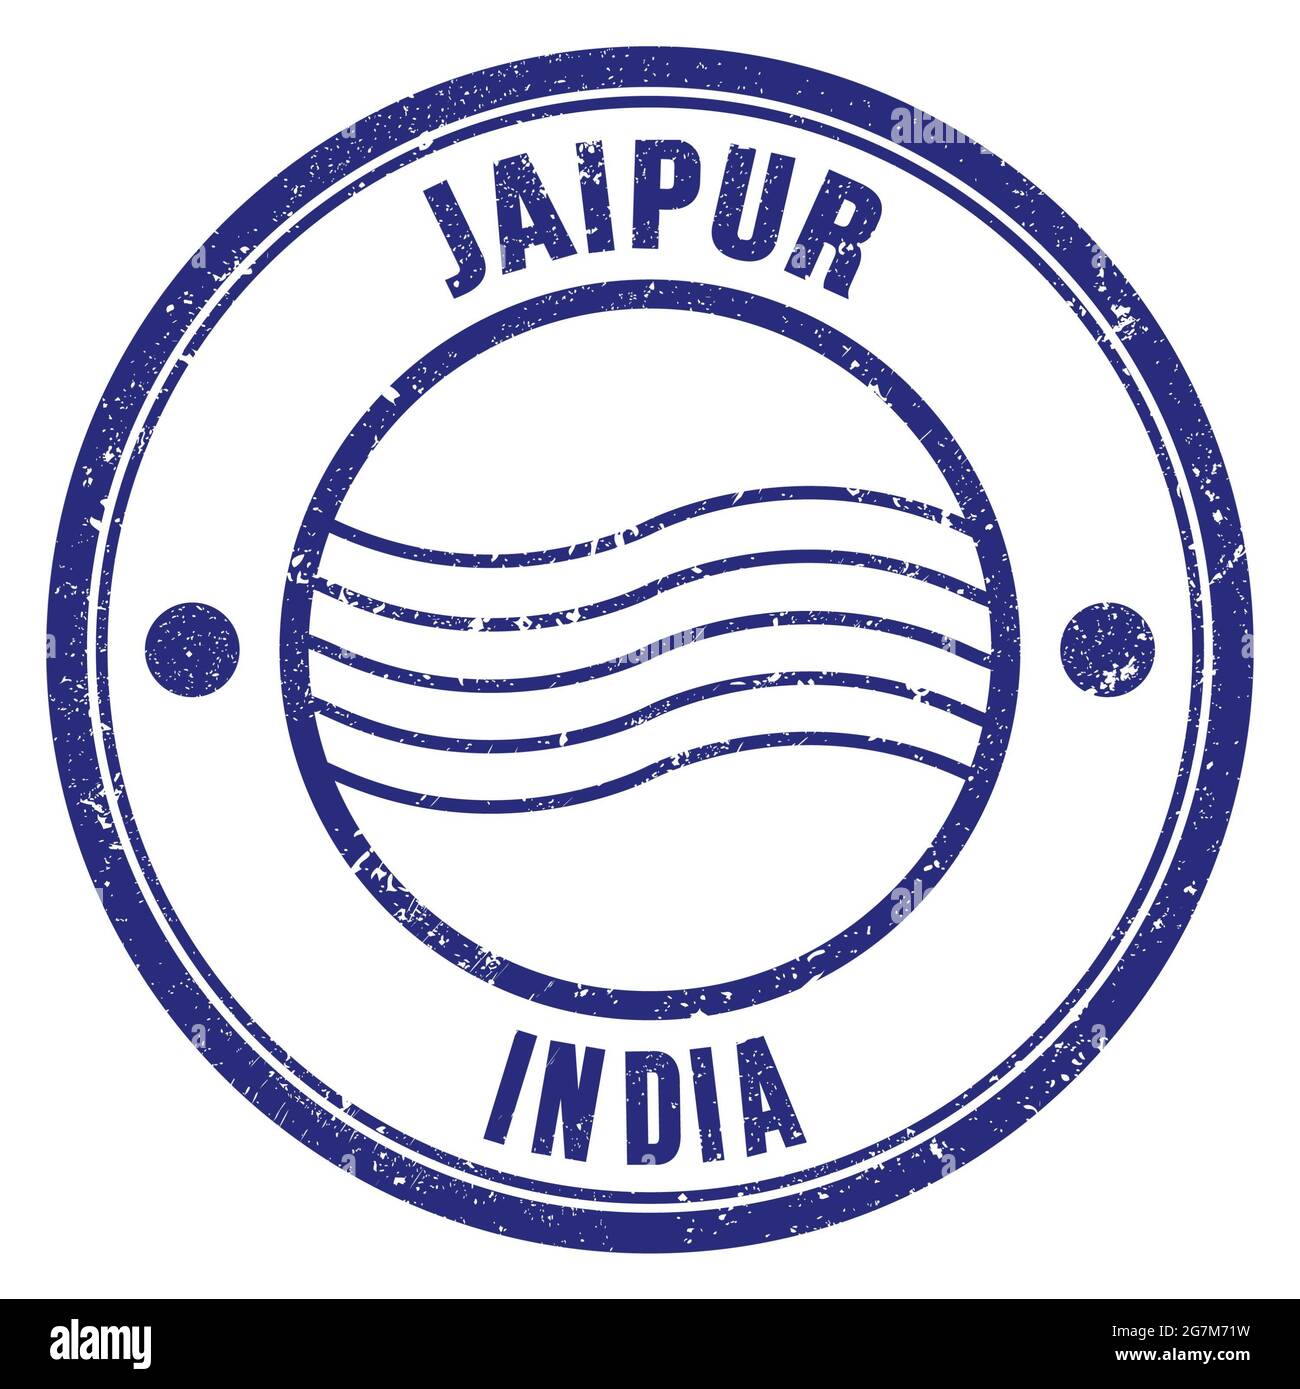 JAIPUR - INDIA, parole scritte sul timbro postale rotondo blu Foto Stock